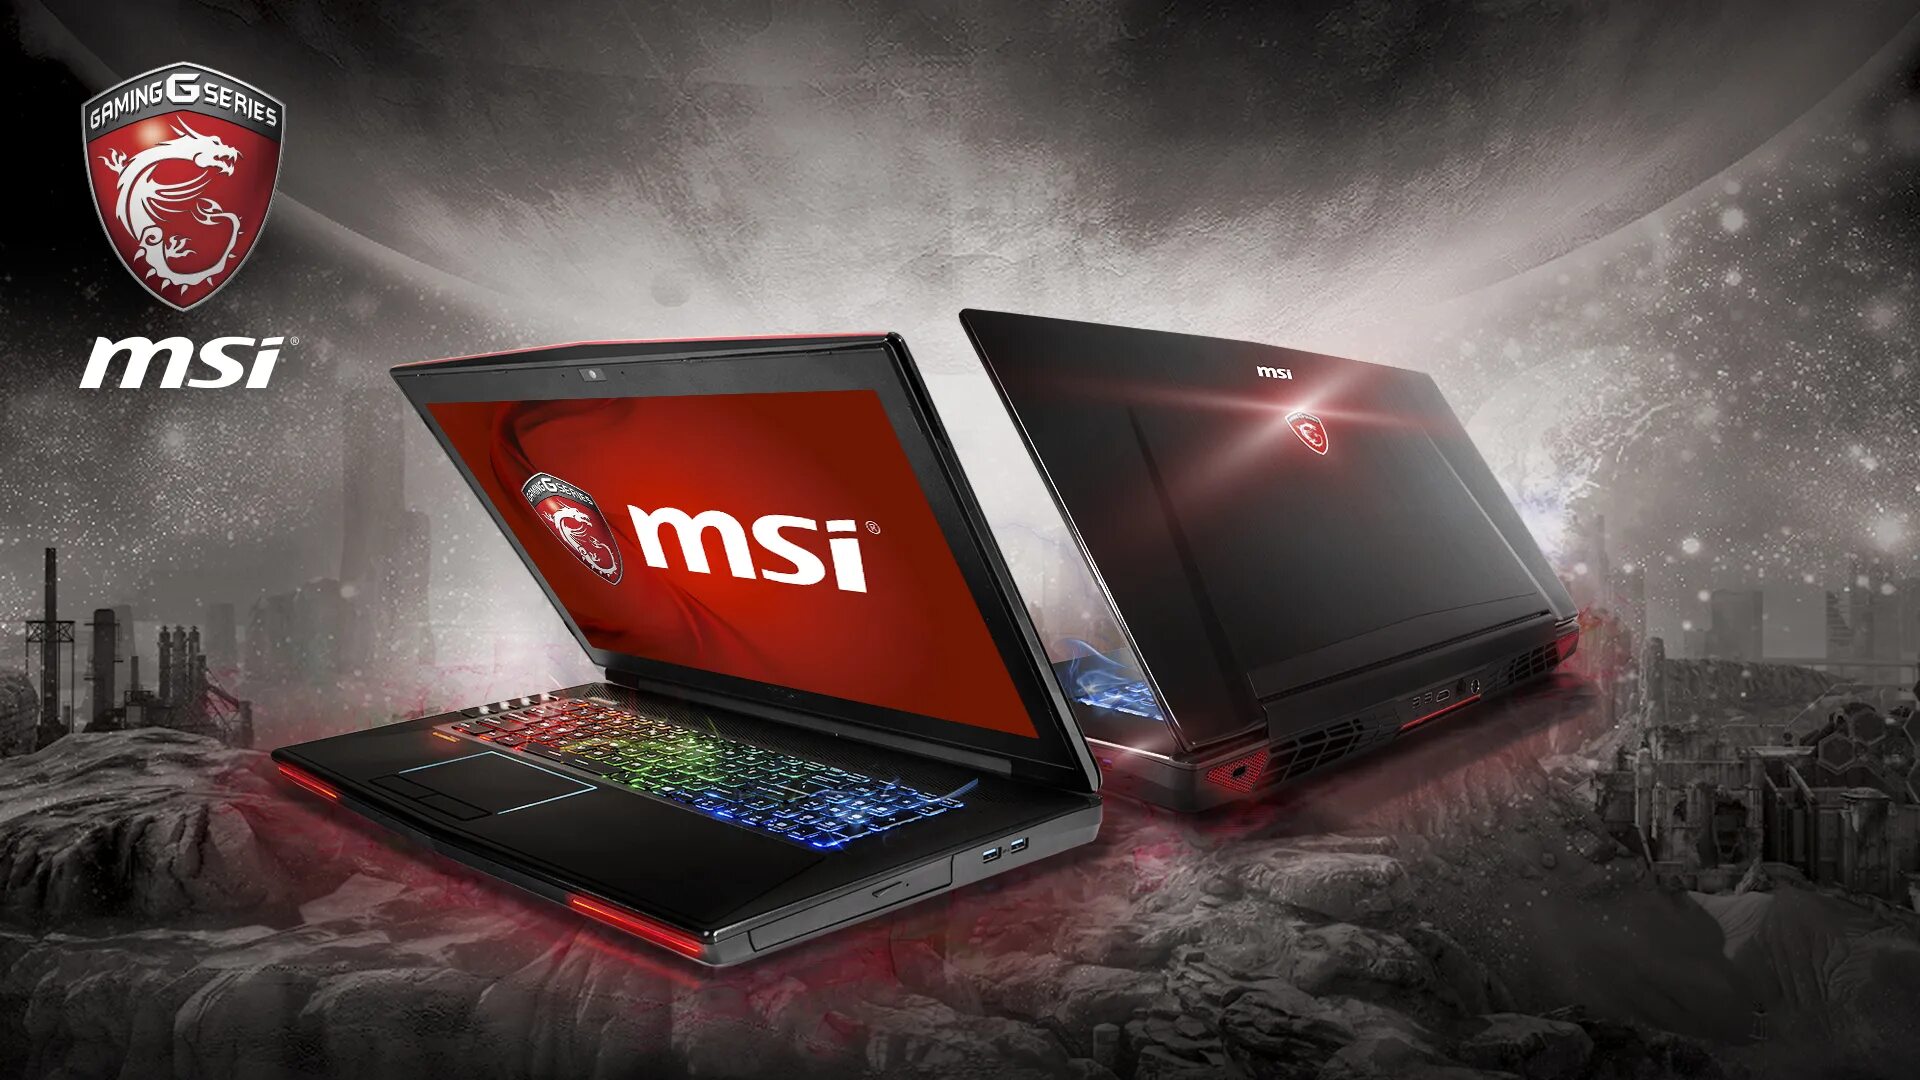 Msi 1920x1080. MSI 4к. Игровой ноутбук MSI Windows 8. MSI обои gt72vr ноутбук. Ноутбук MSI Leopard.